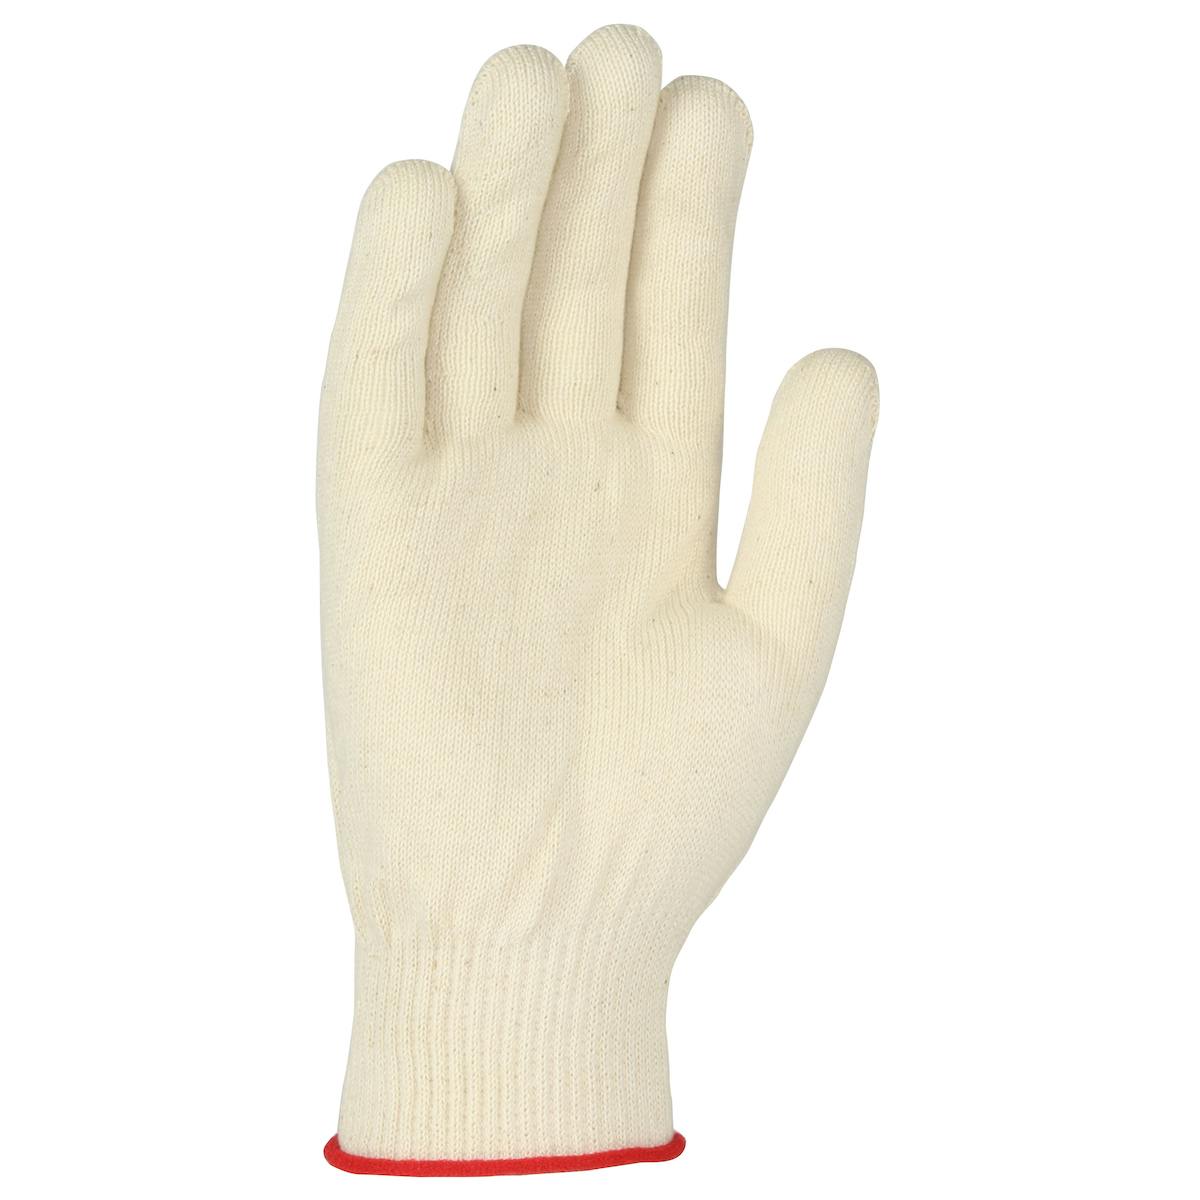 Seamless Knit Cotton Glove - Light Weight, Beige (M13NC) - S